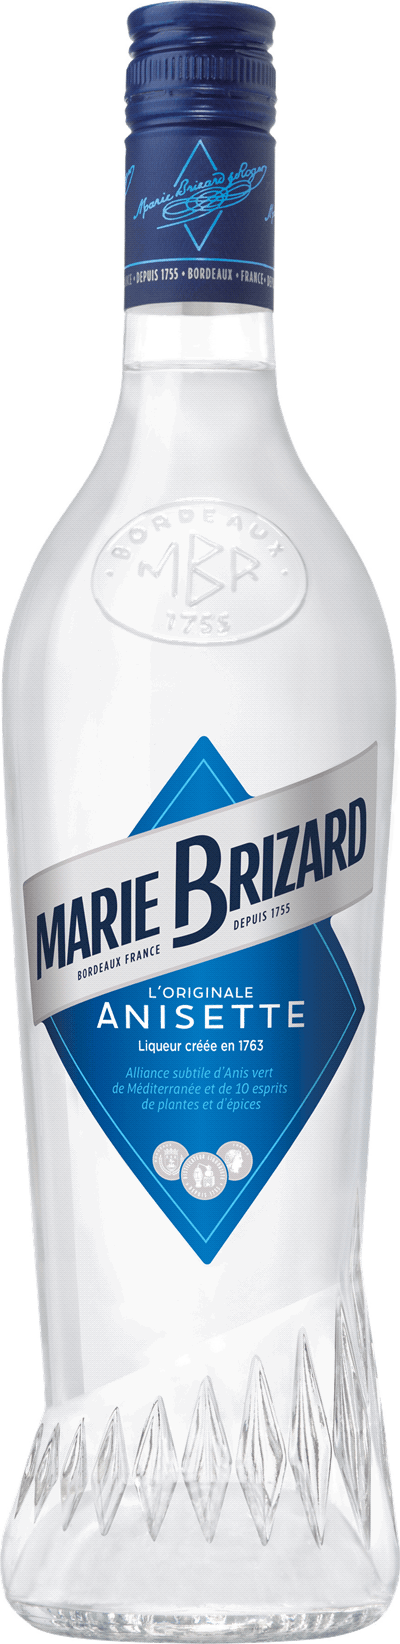 Marie Brizard L'Originale Anisette 750ml - Old Town Tequila